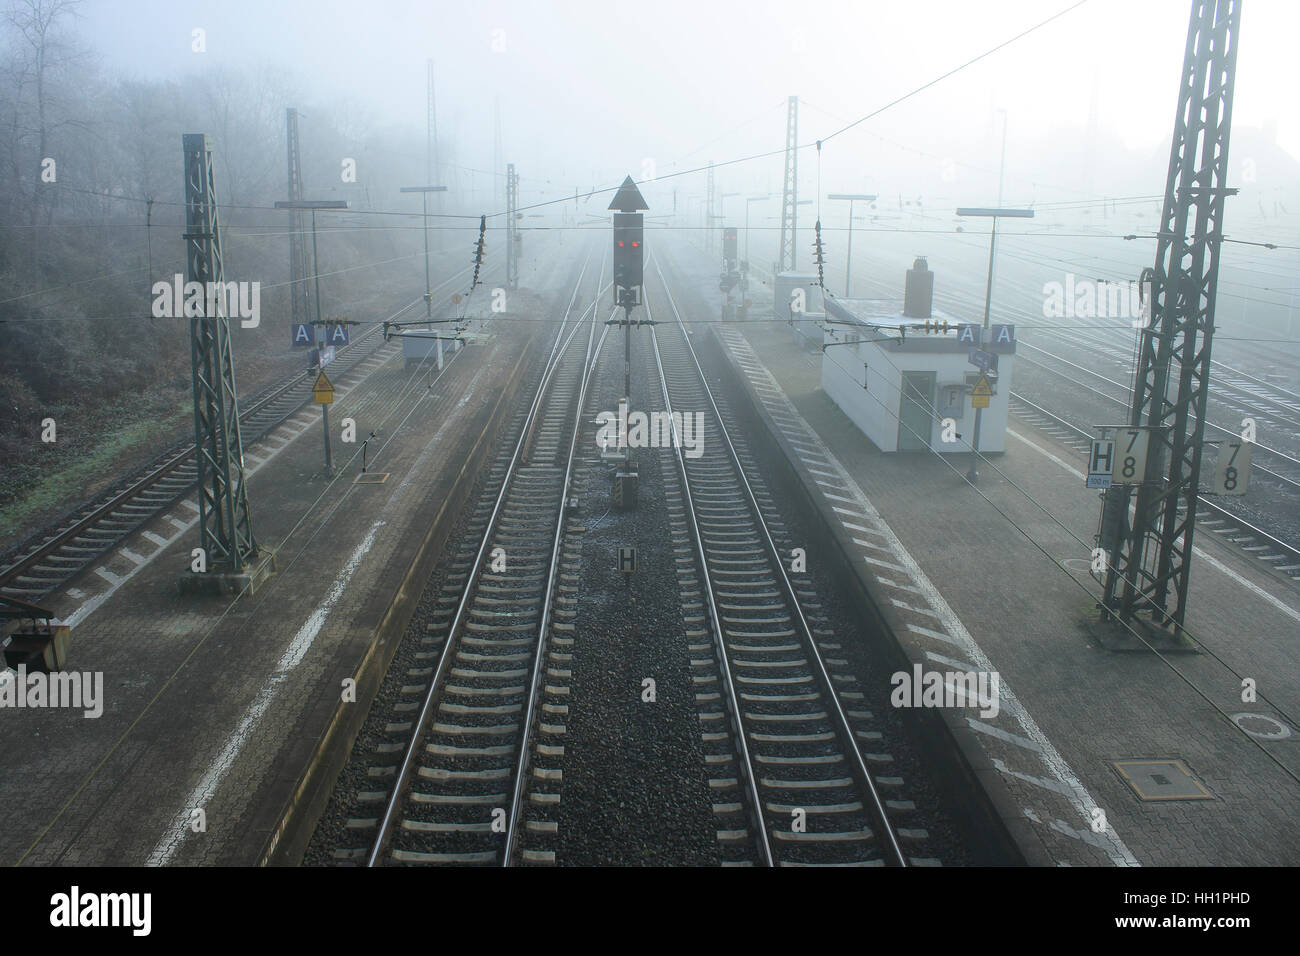 The Fog on Bischofsheim railway station. Mainz. Germany Stock Photo